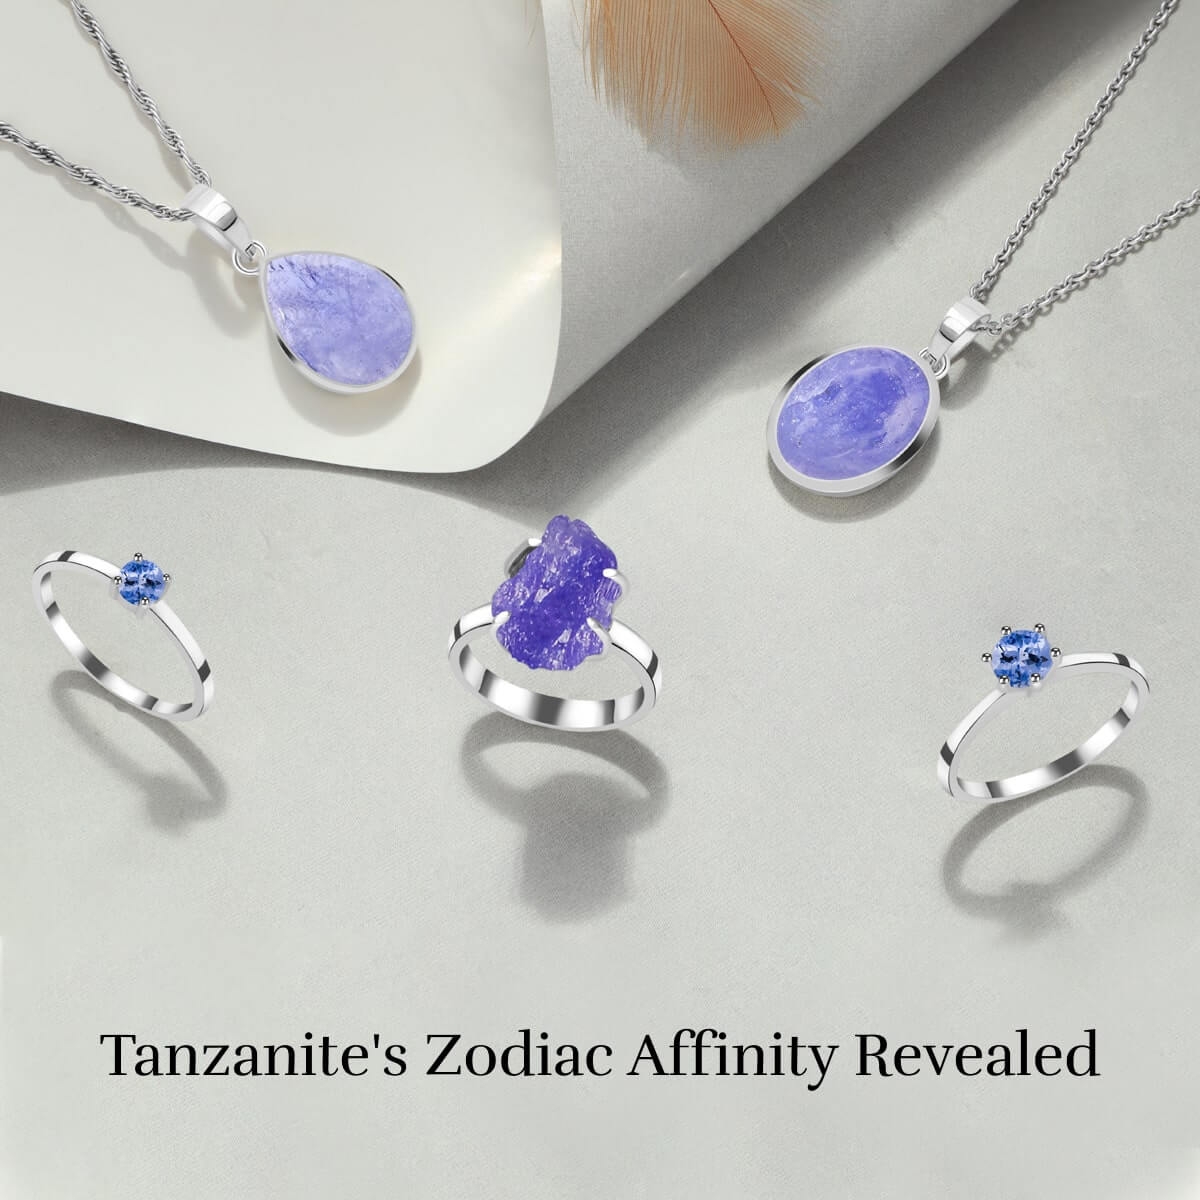 Zodiac Sign Associated with Tanzanite